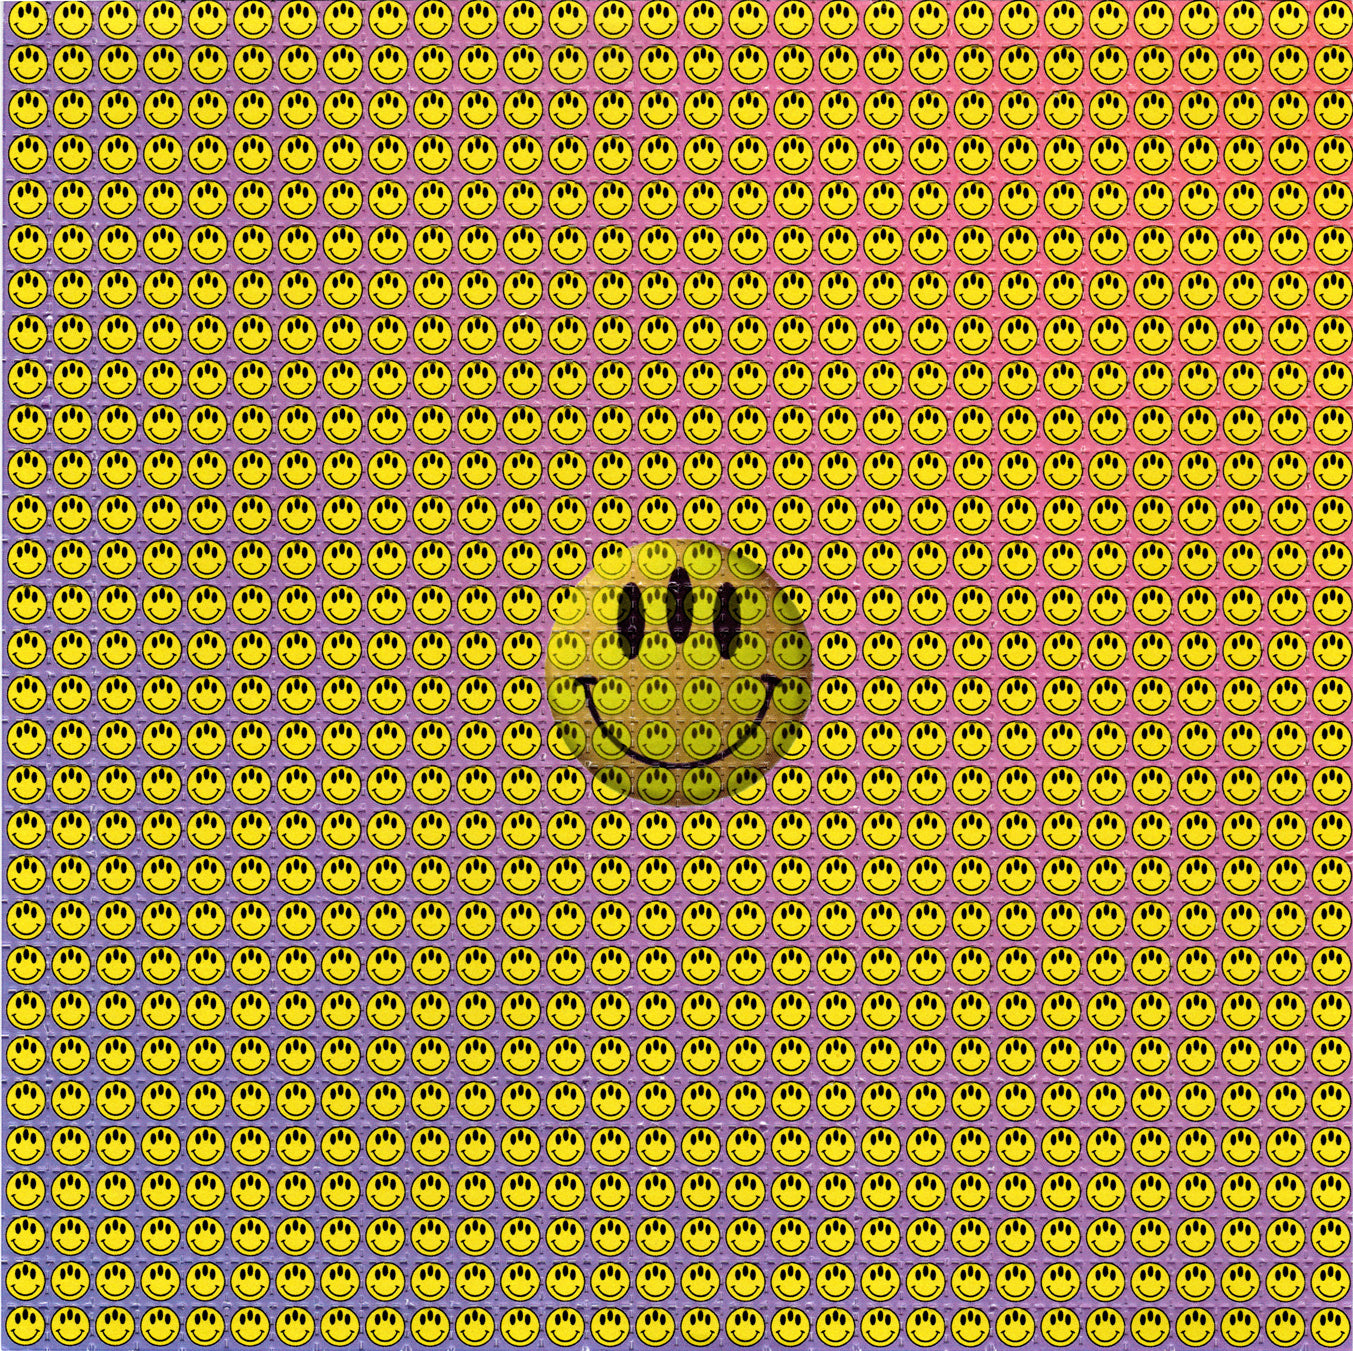 Three Eyed  Smiley Face LSD blotter art print